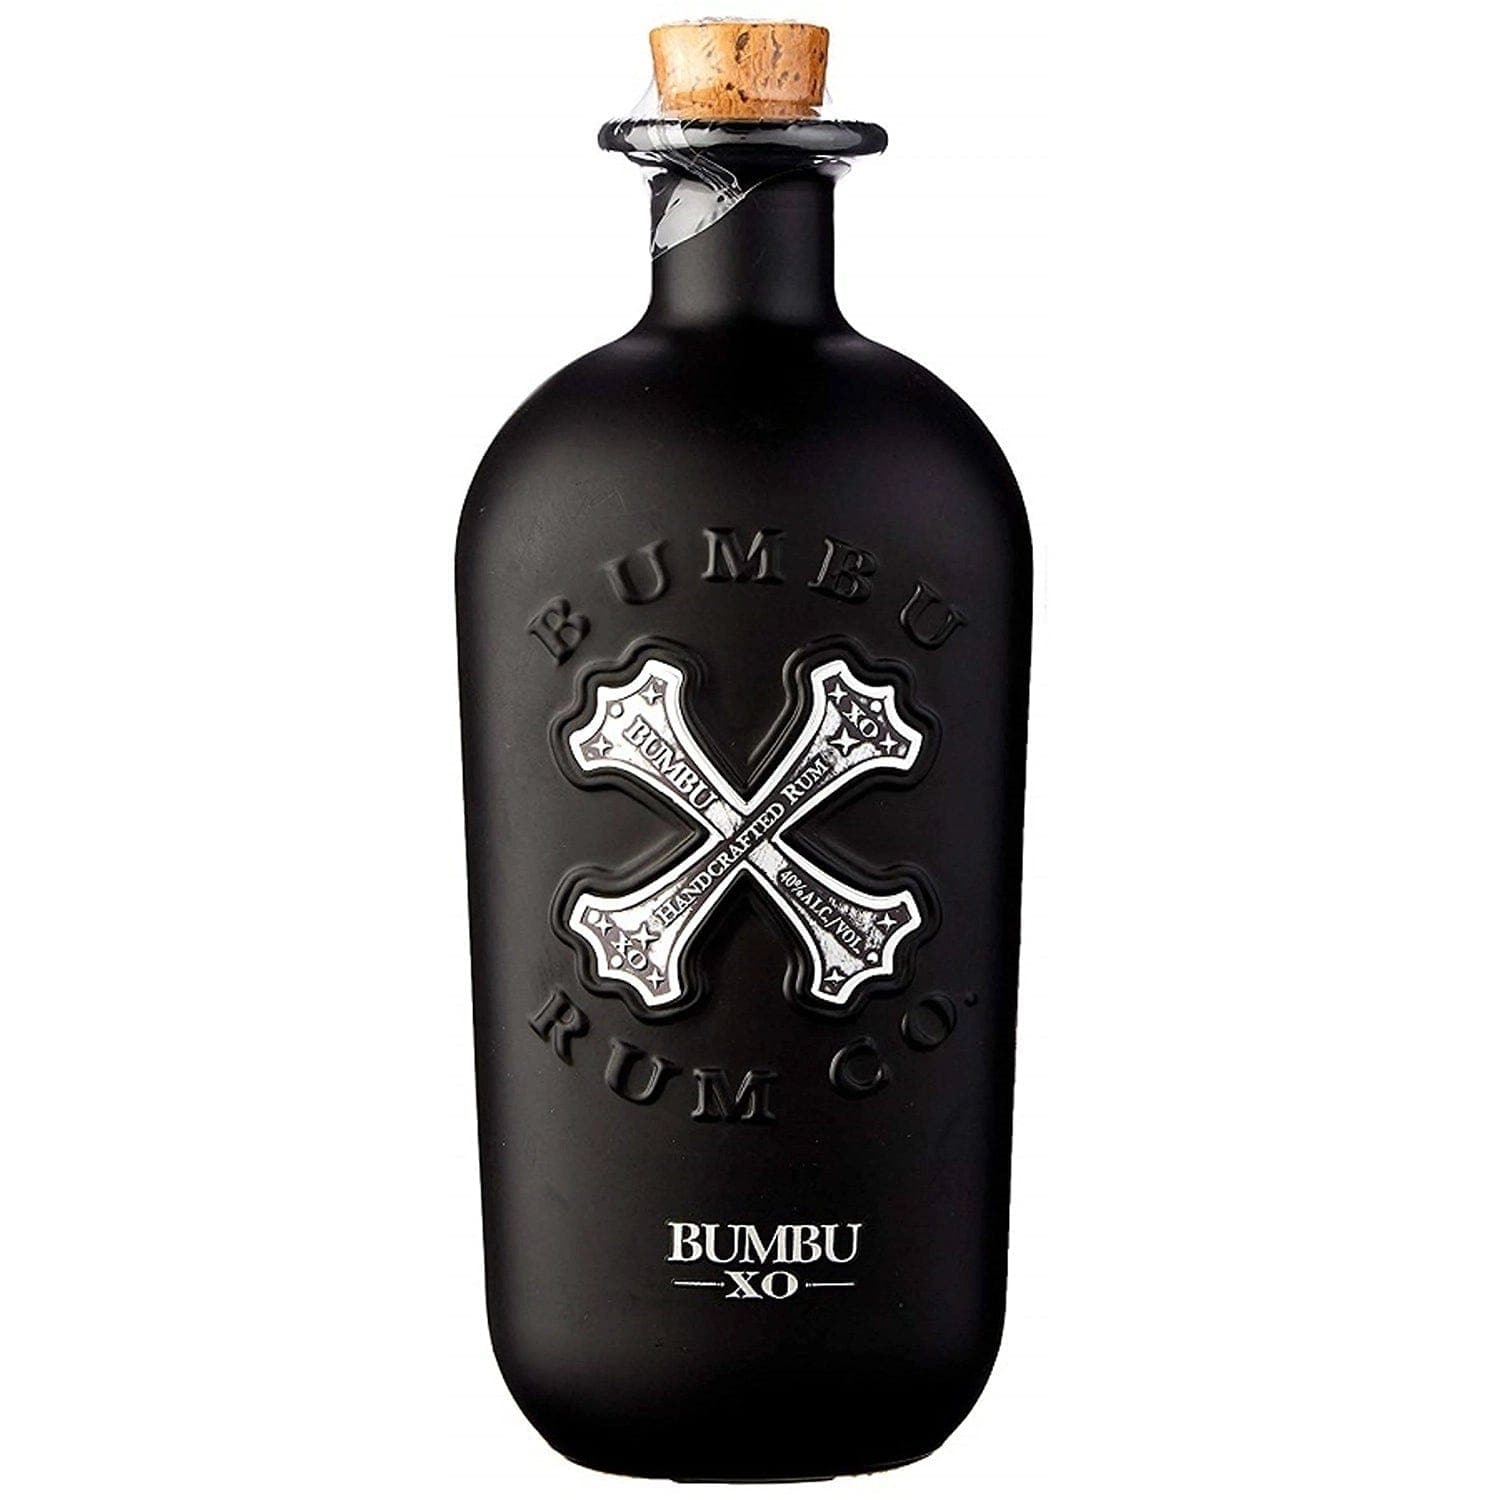 Bumbu XO Rum - Barbank